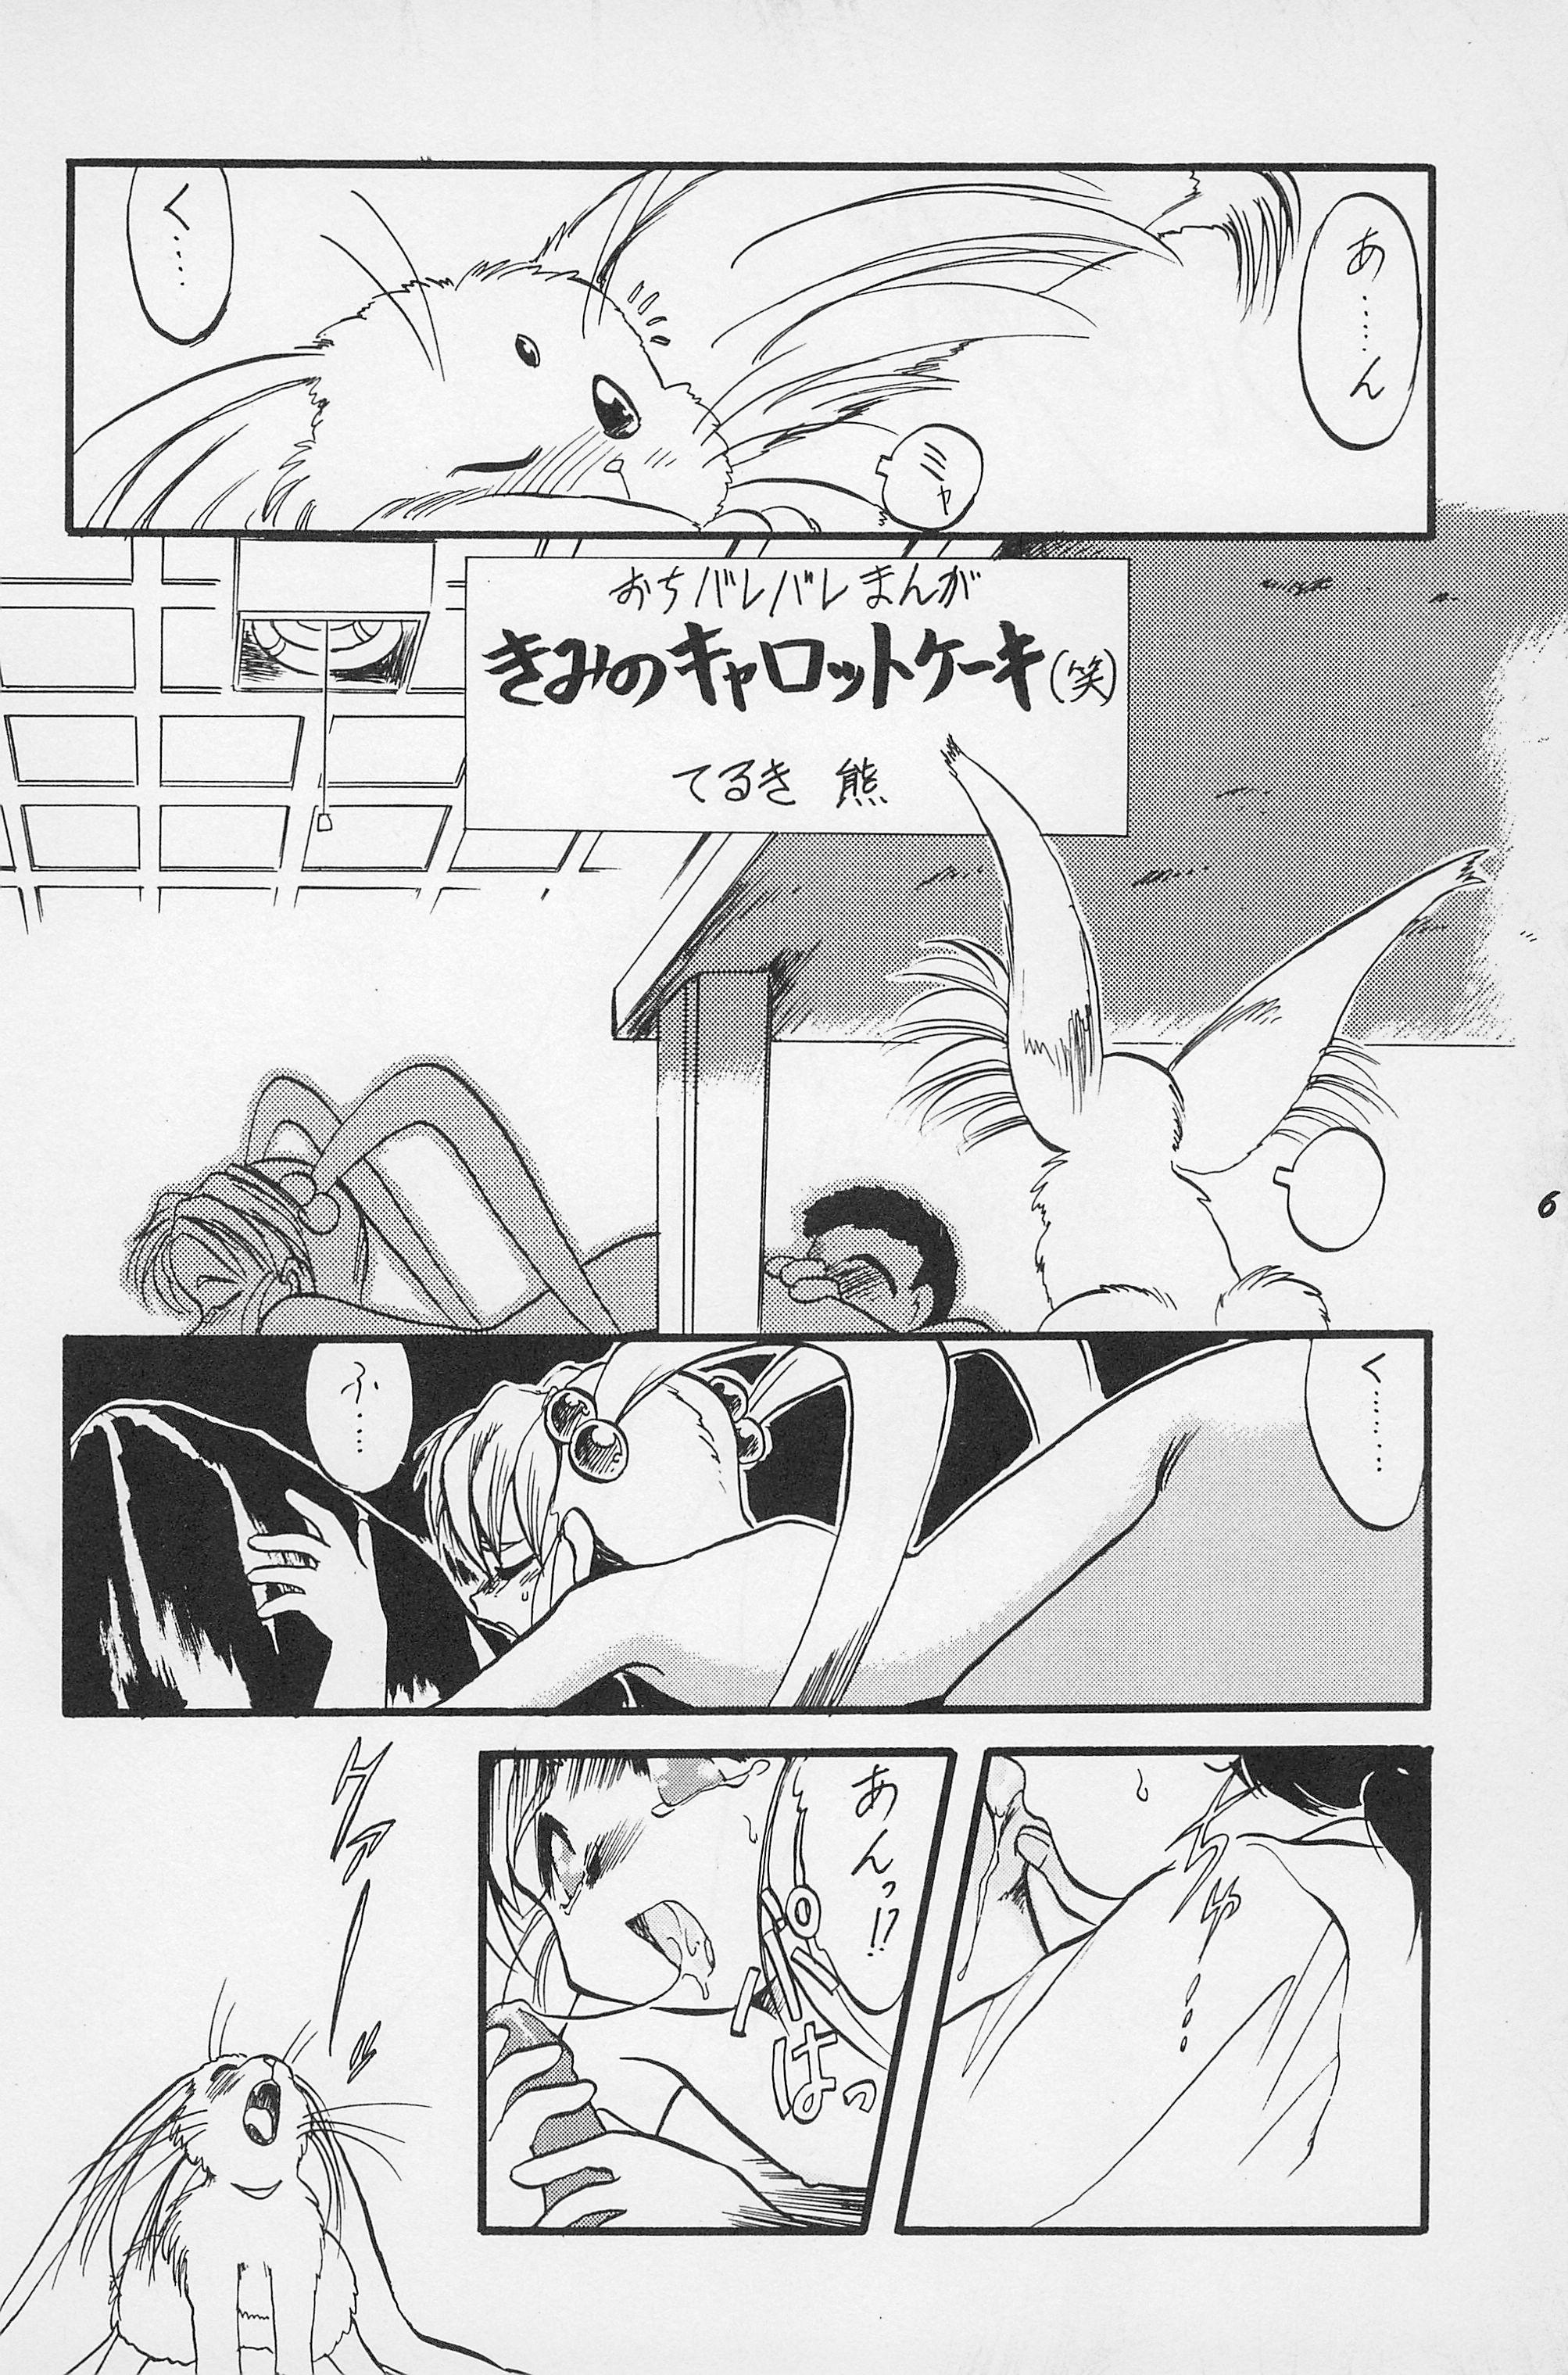 Big Ass Teddy Bear no Omise Vol. 1 - Sailor moon Darkstalkers Tenchi muyo Earthbound Samurai pizza cats Furry - Page 8